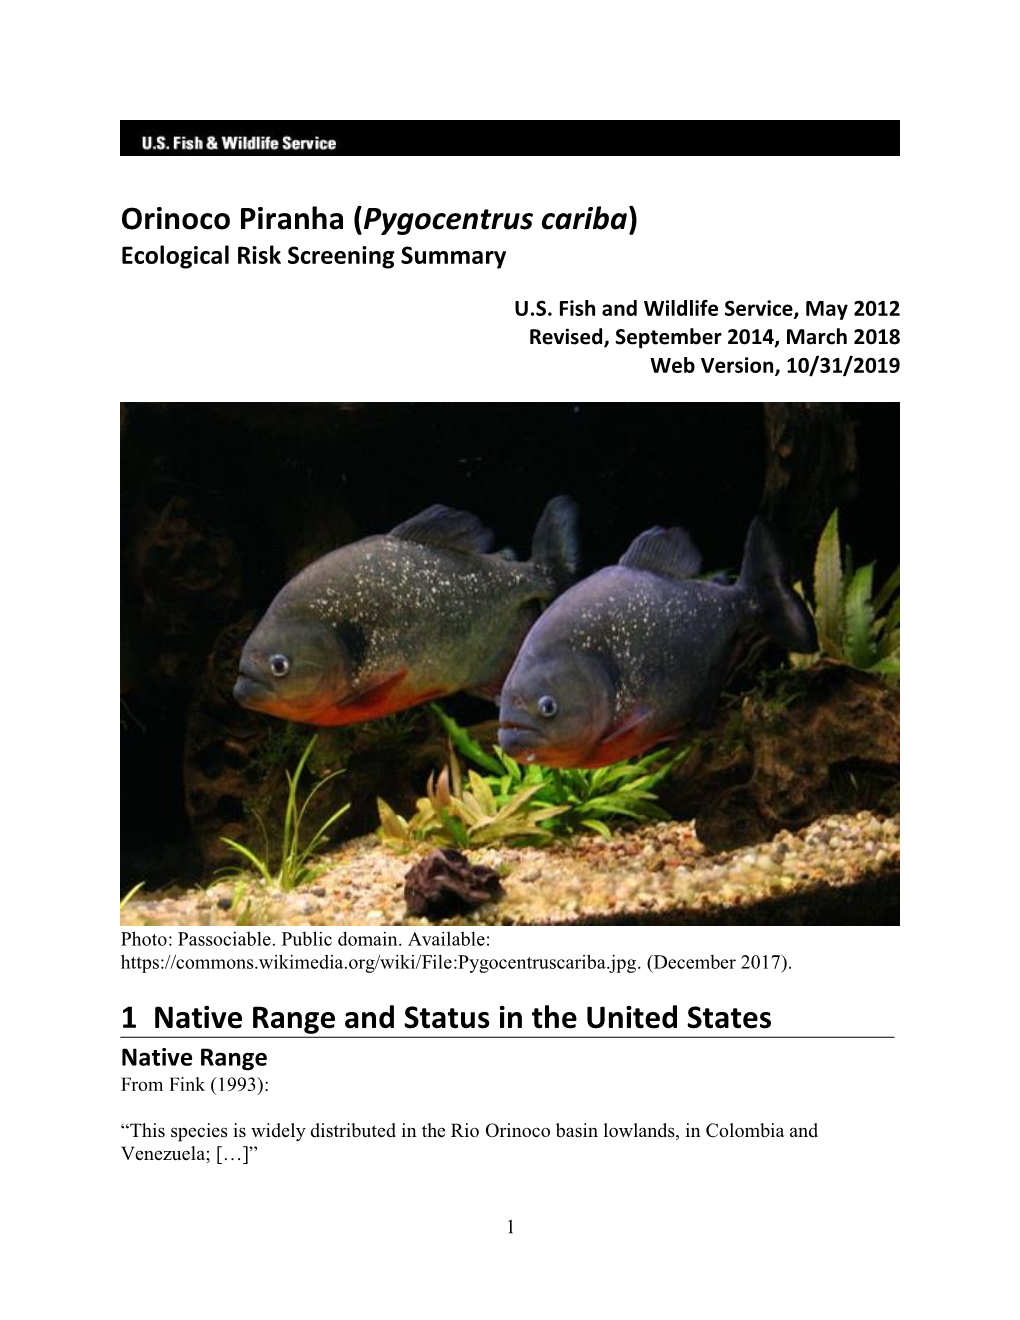 Pygocentrus Cariba (Orinoco Piranha) Ecological Risk Screening Summary